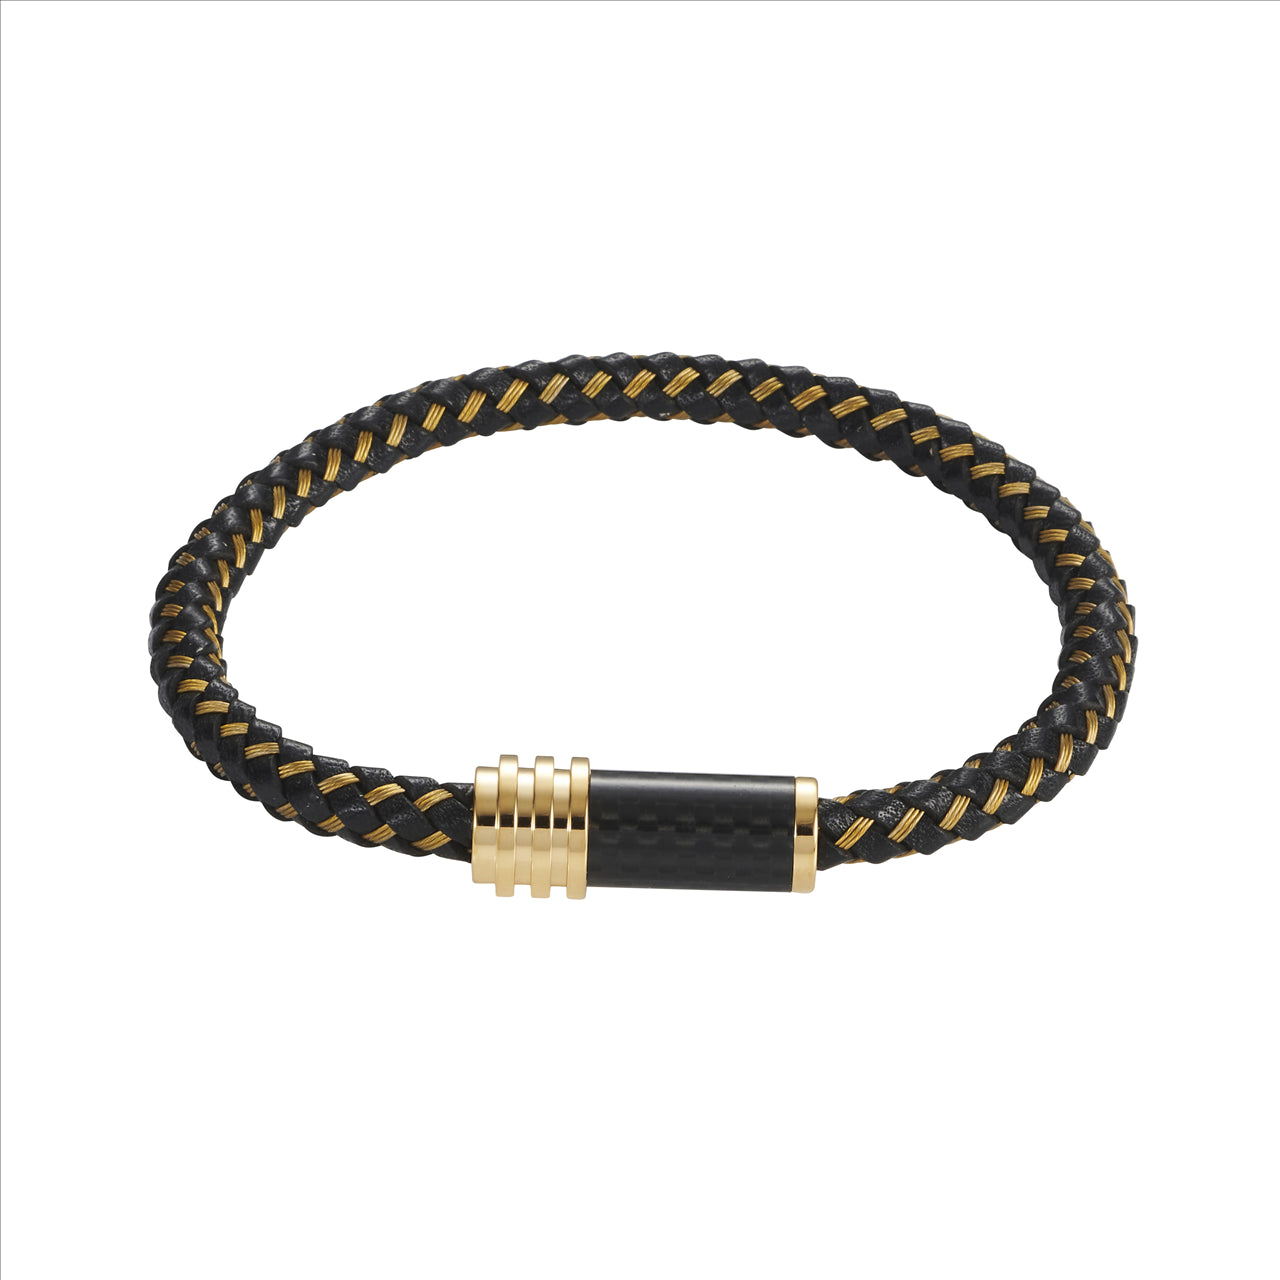 Stainless Steel IP Gold/Black Leather Cable Carbon Fibre Bracelet